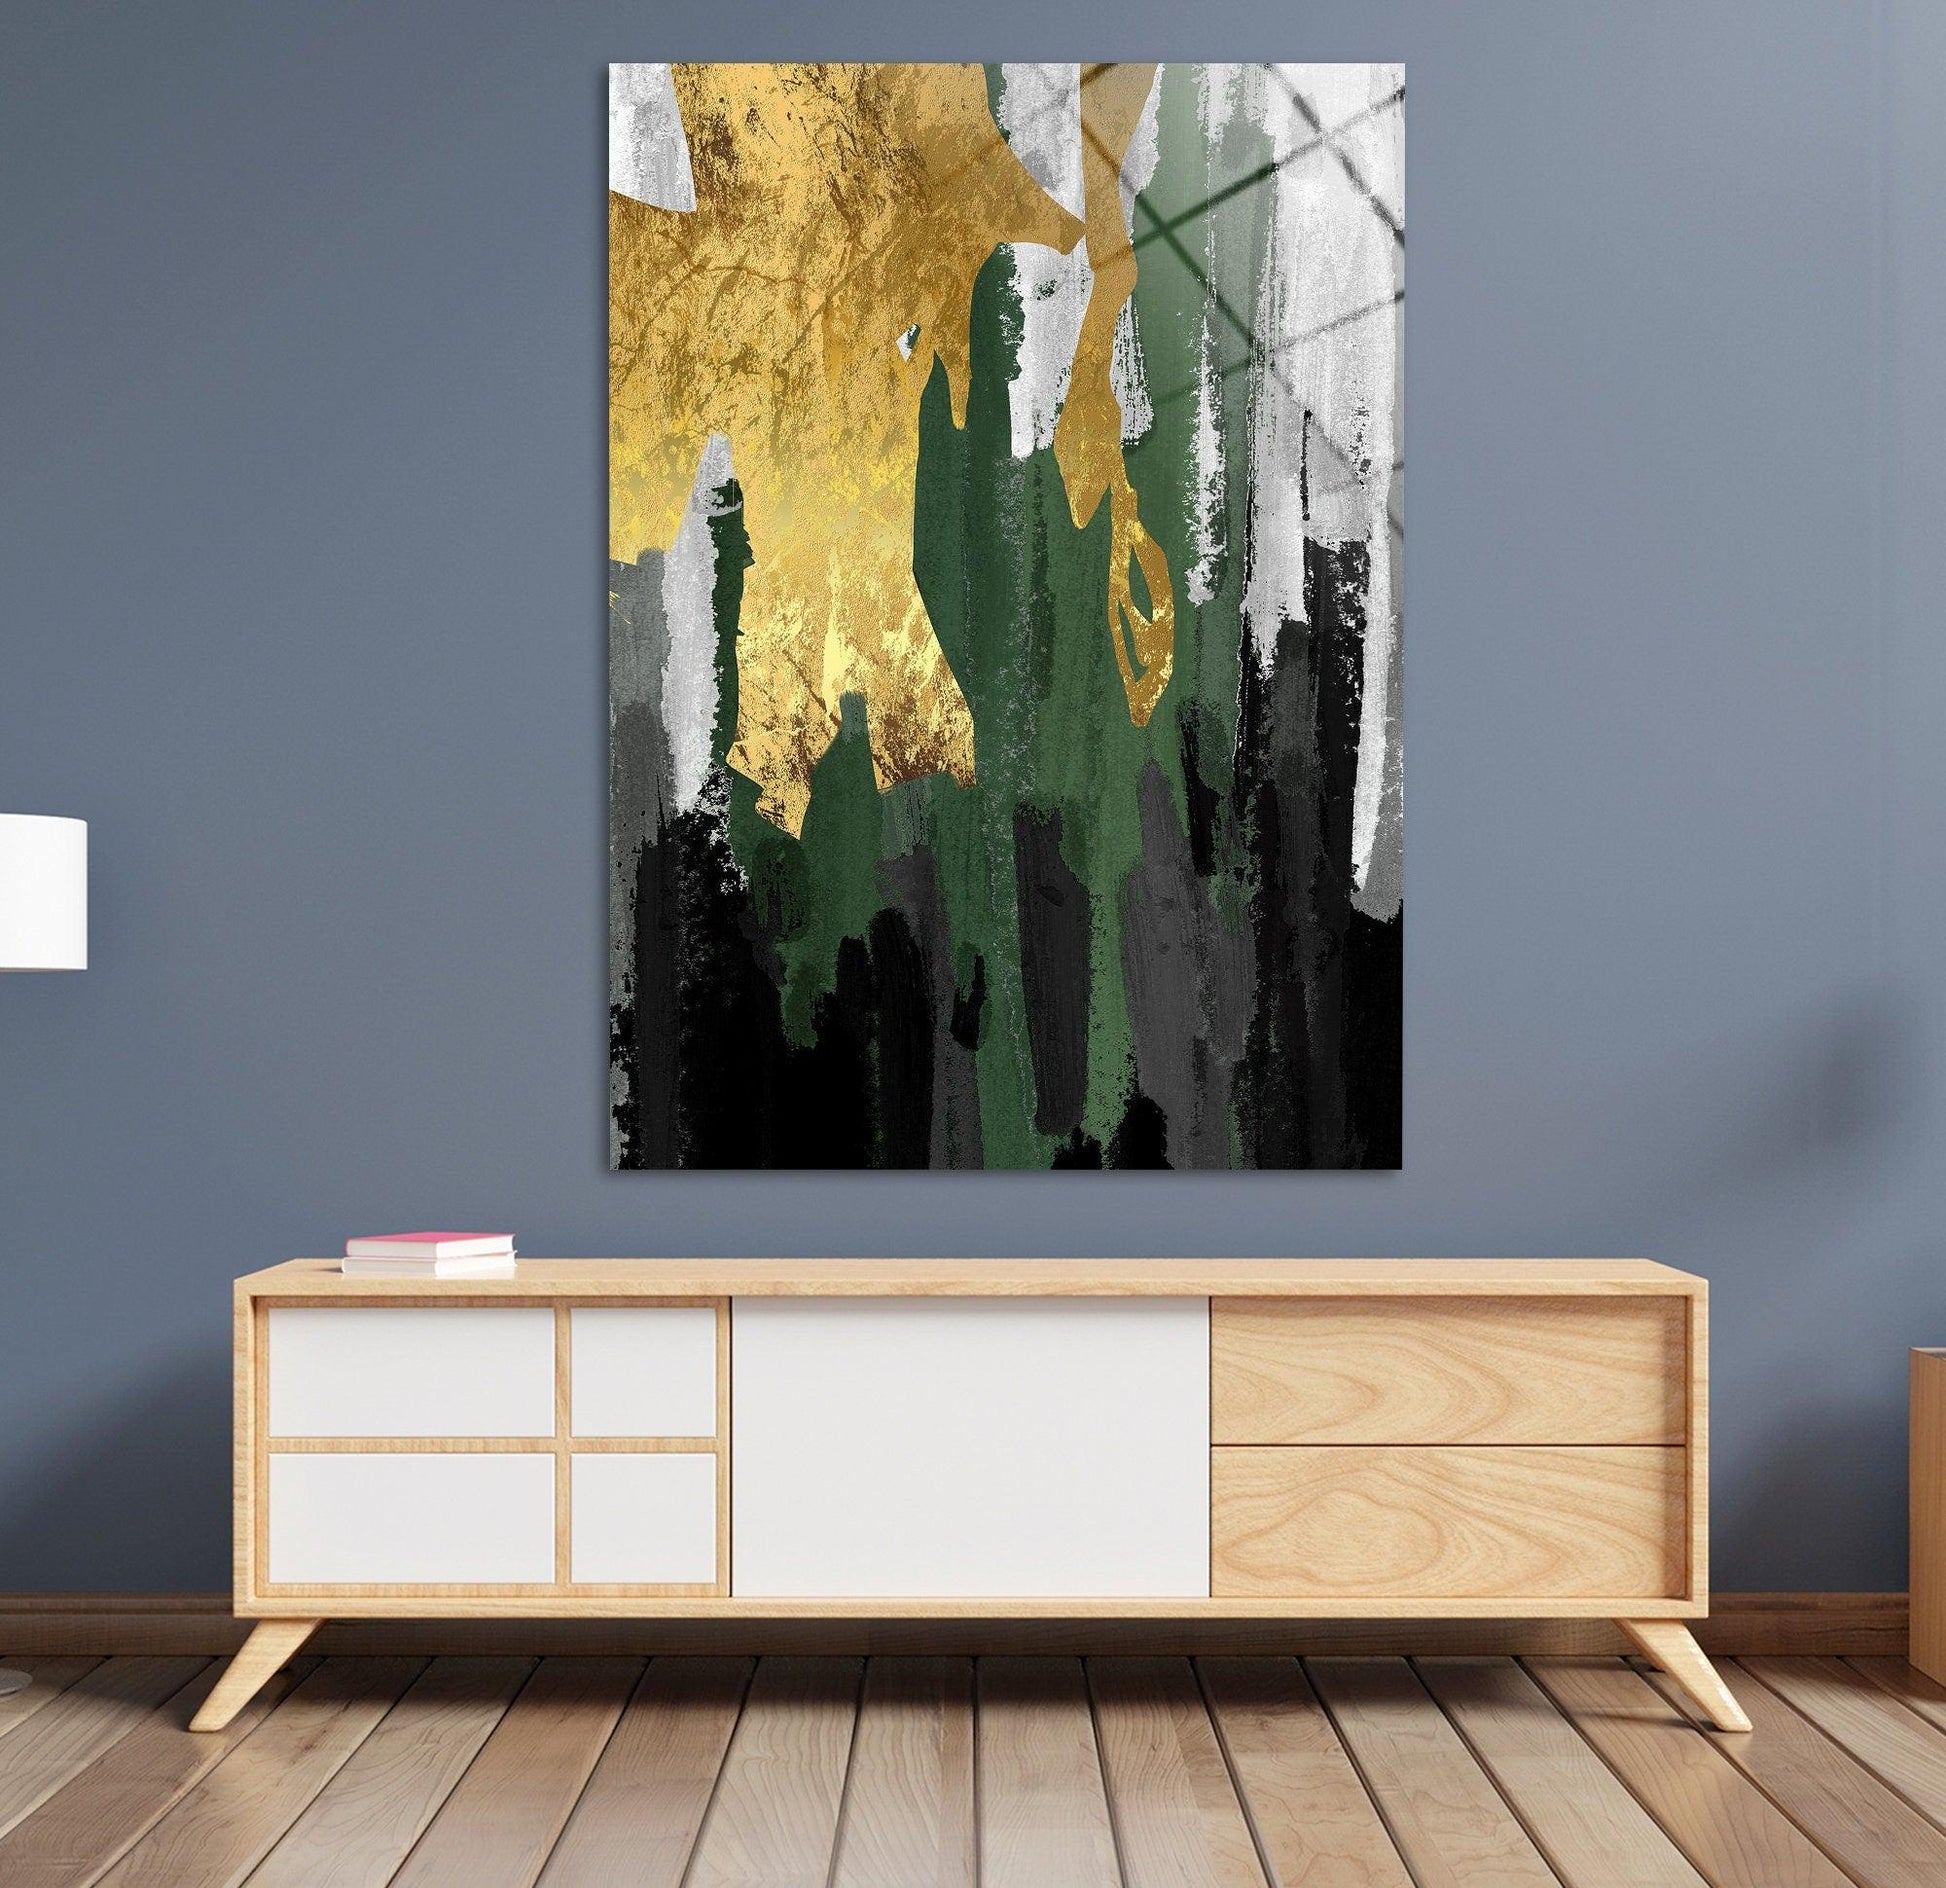 gold and green glass wall art| Beige Wall Art, Abstract Art, Minimalist Wall Art, Gallery Wall Set, Living Room Decor,  Emerald Green & Gold - TrendiArt